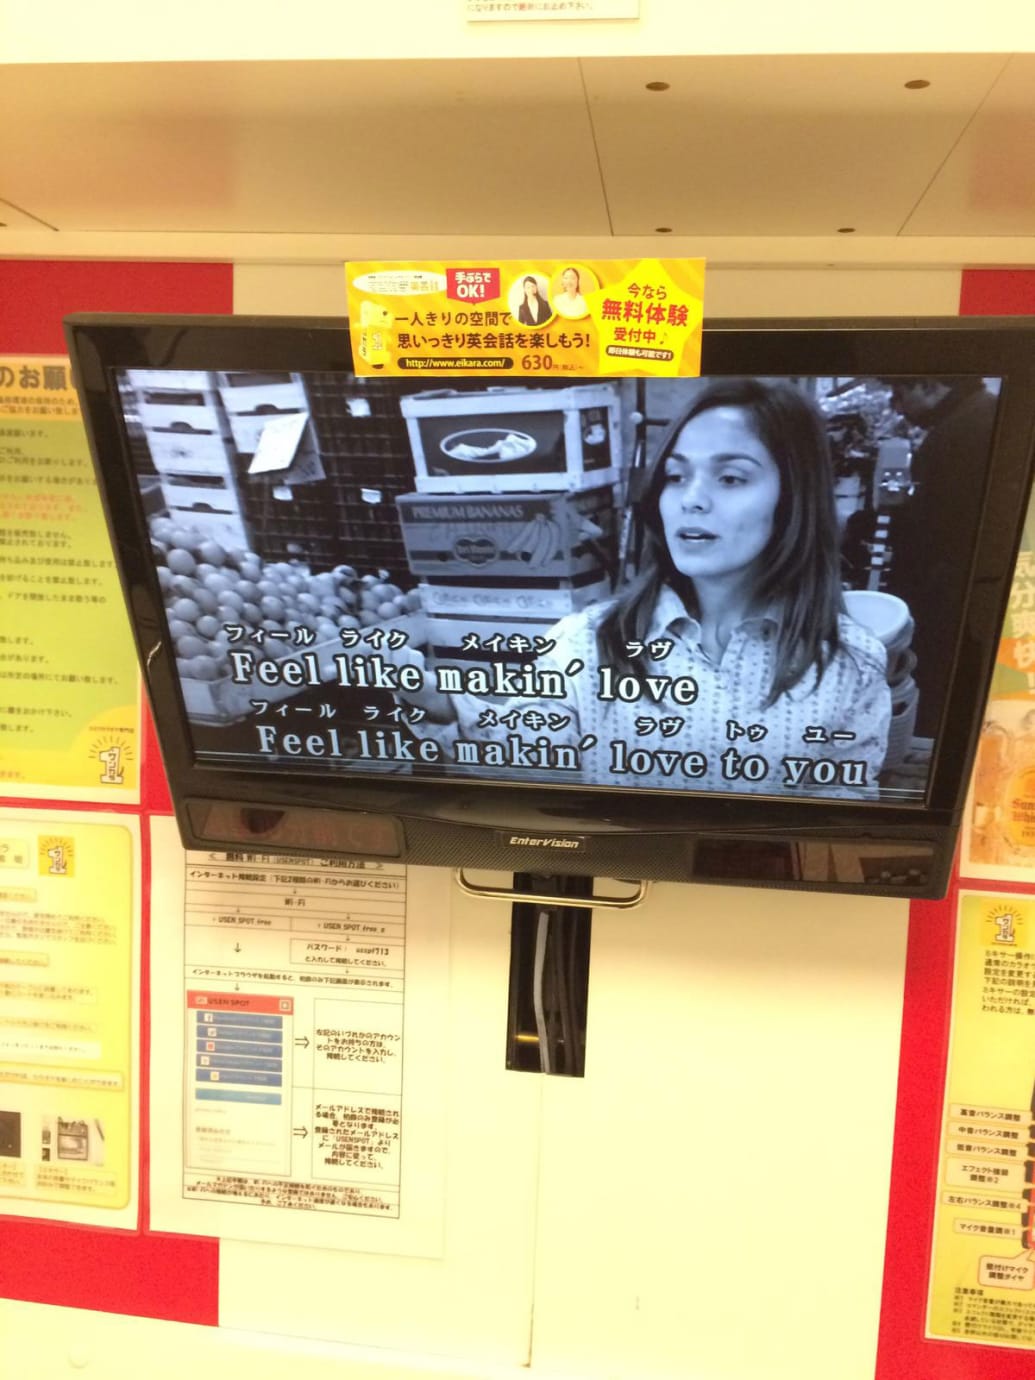 Tóquio inspira karaoke na República - PressReader